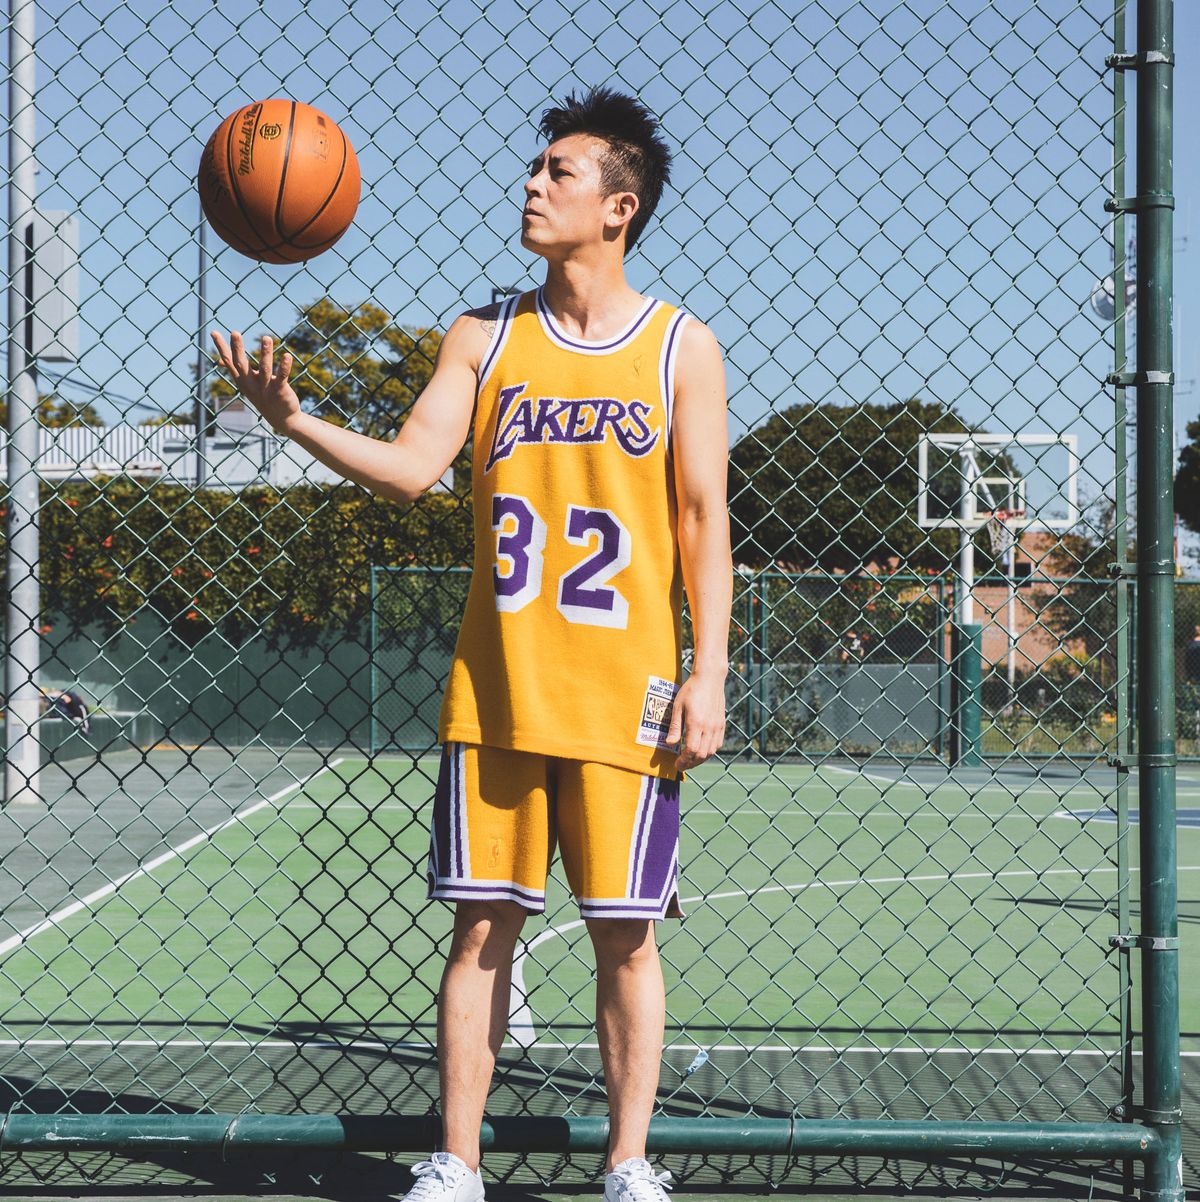 Los Angeles Lakers NBA crop top - Collabs - T-shirts - CLOTHING